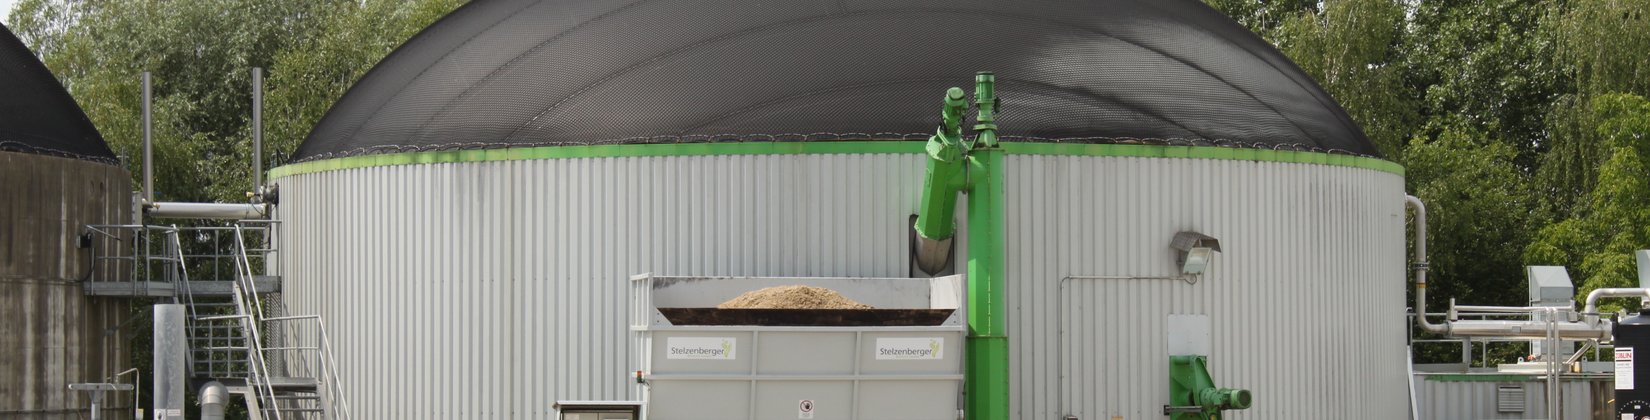 Biogasanlage © Fachverband Biogas e.V.